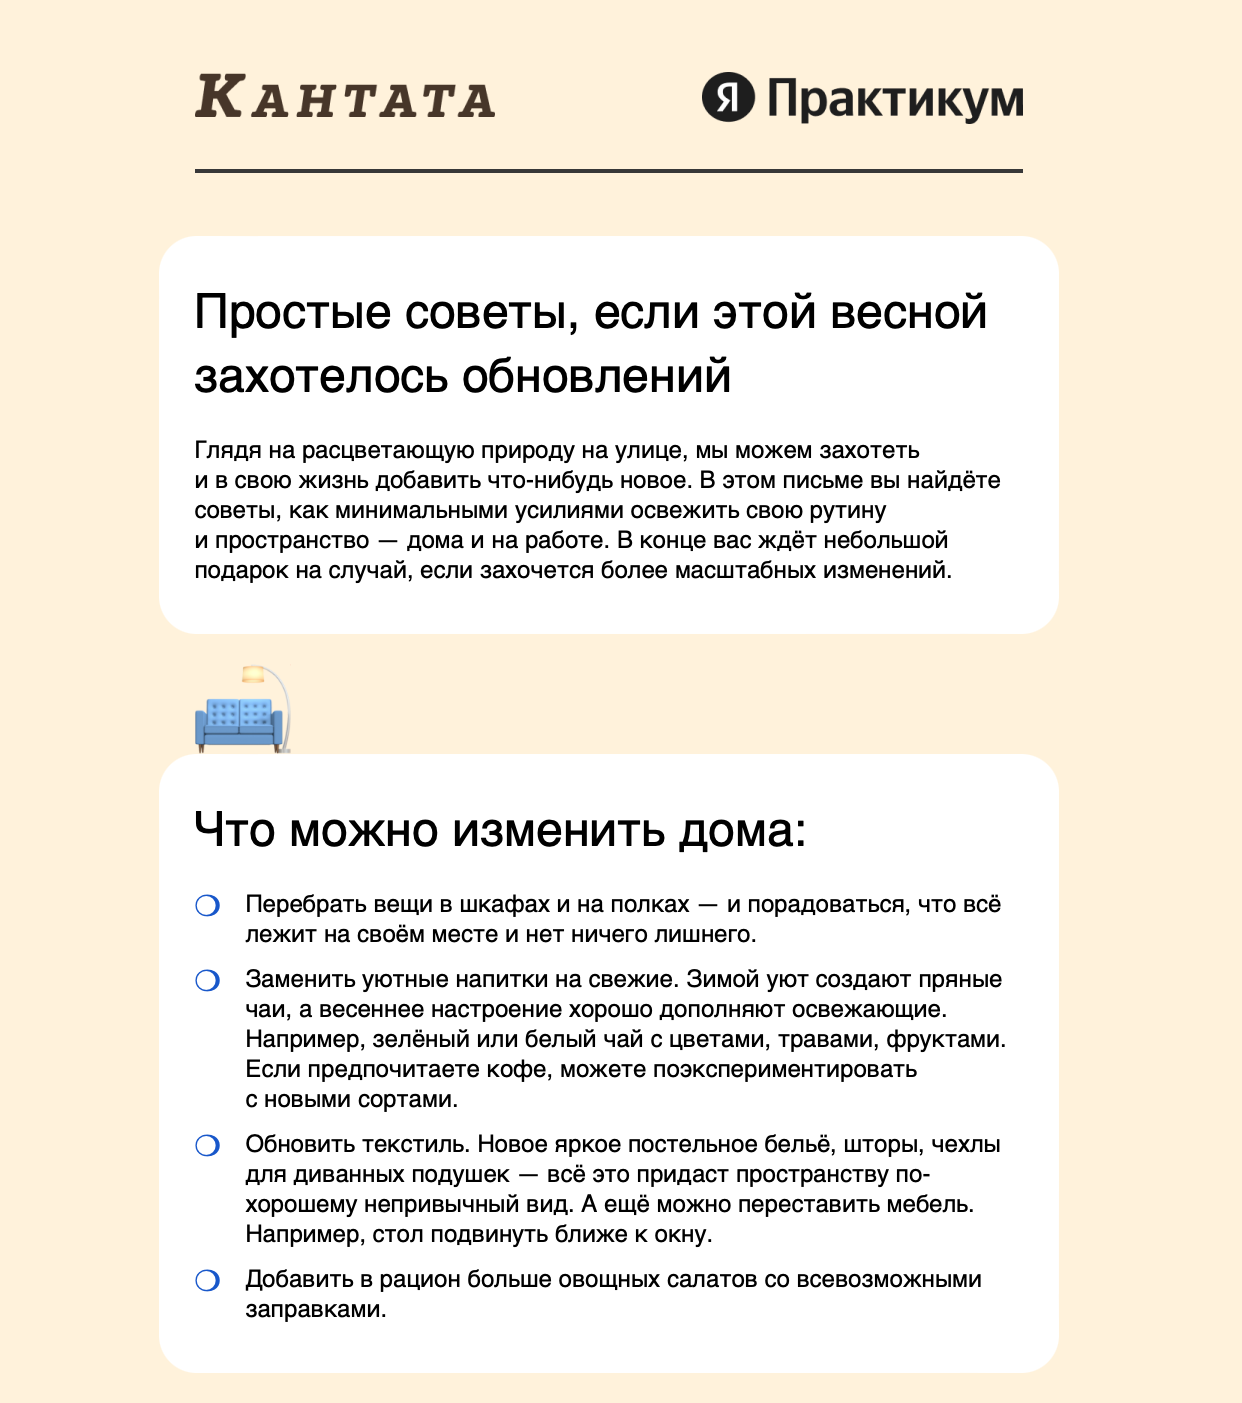 Скриншот рассылки «Кантаты» и «Яндекс Практикума» 